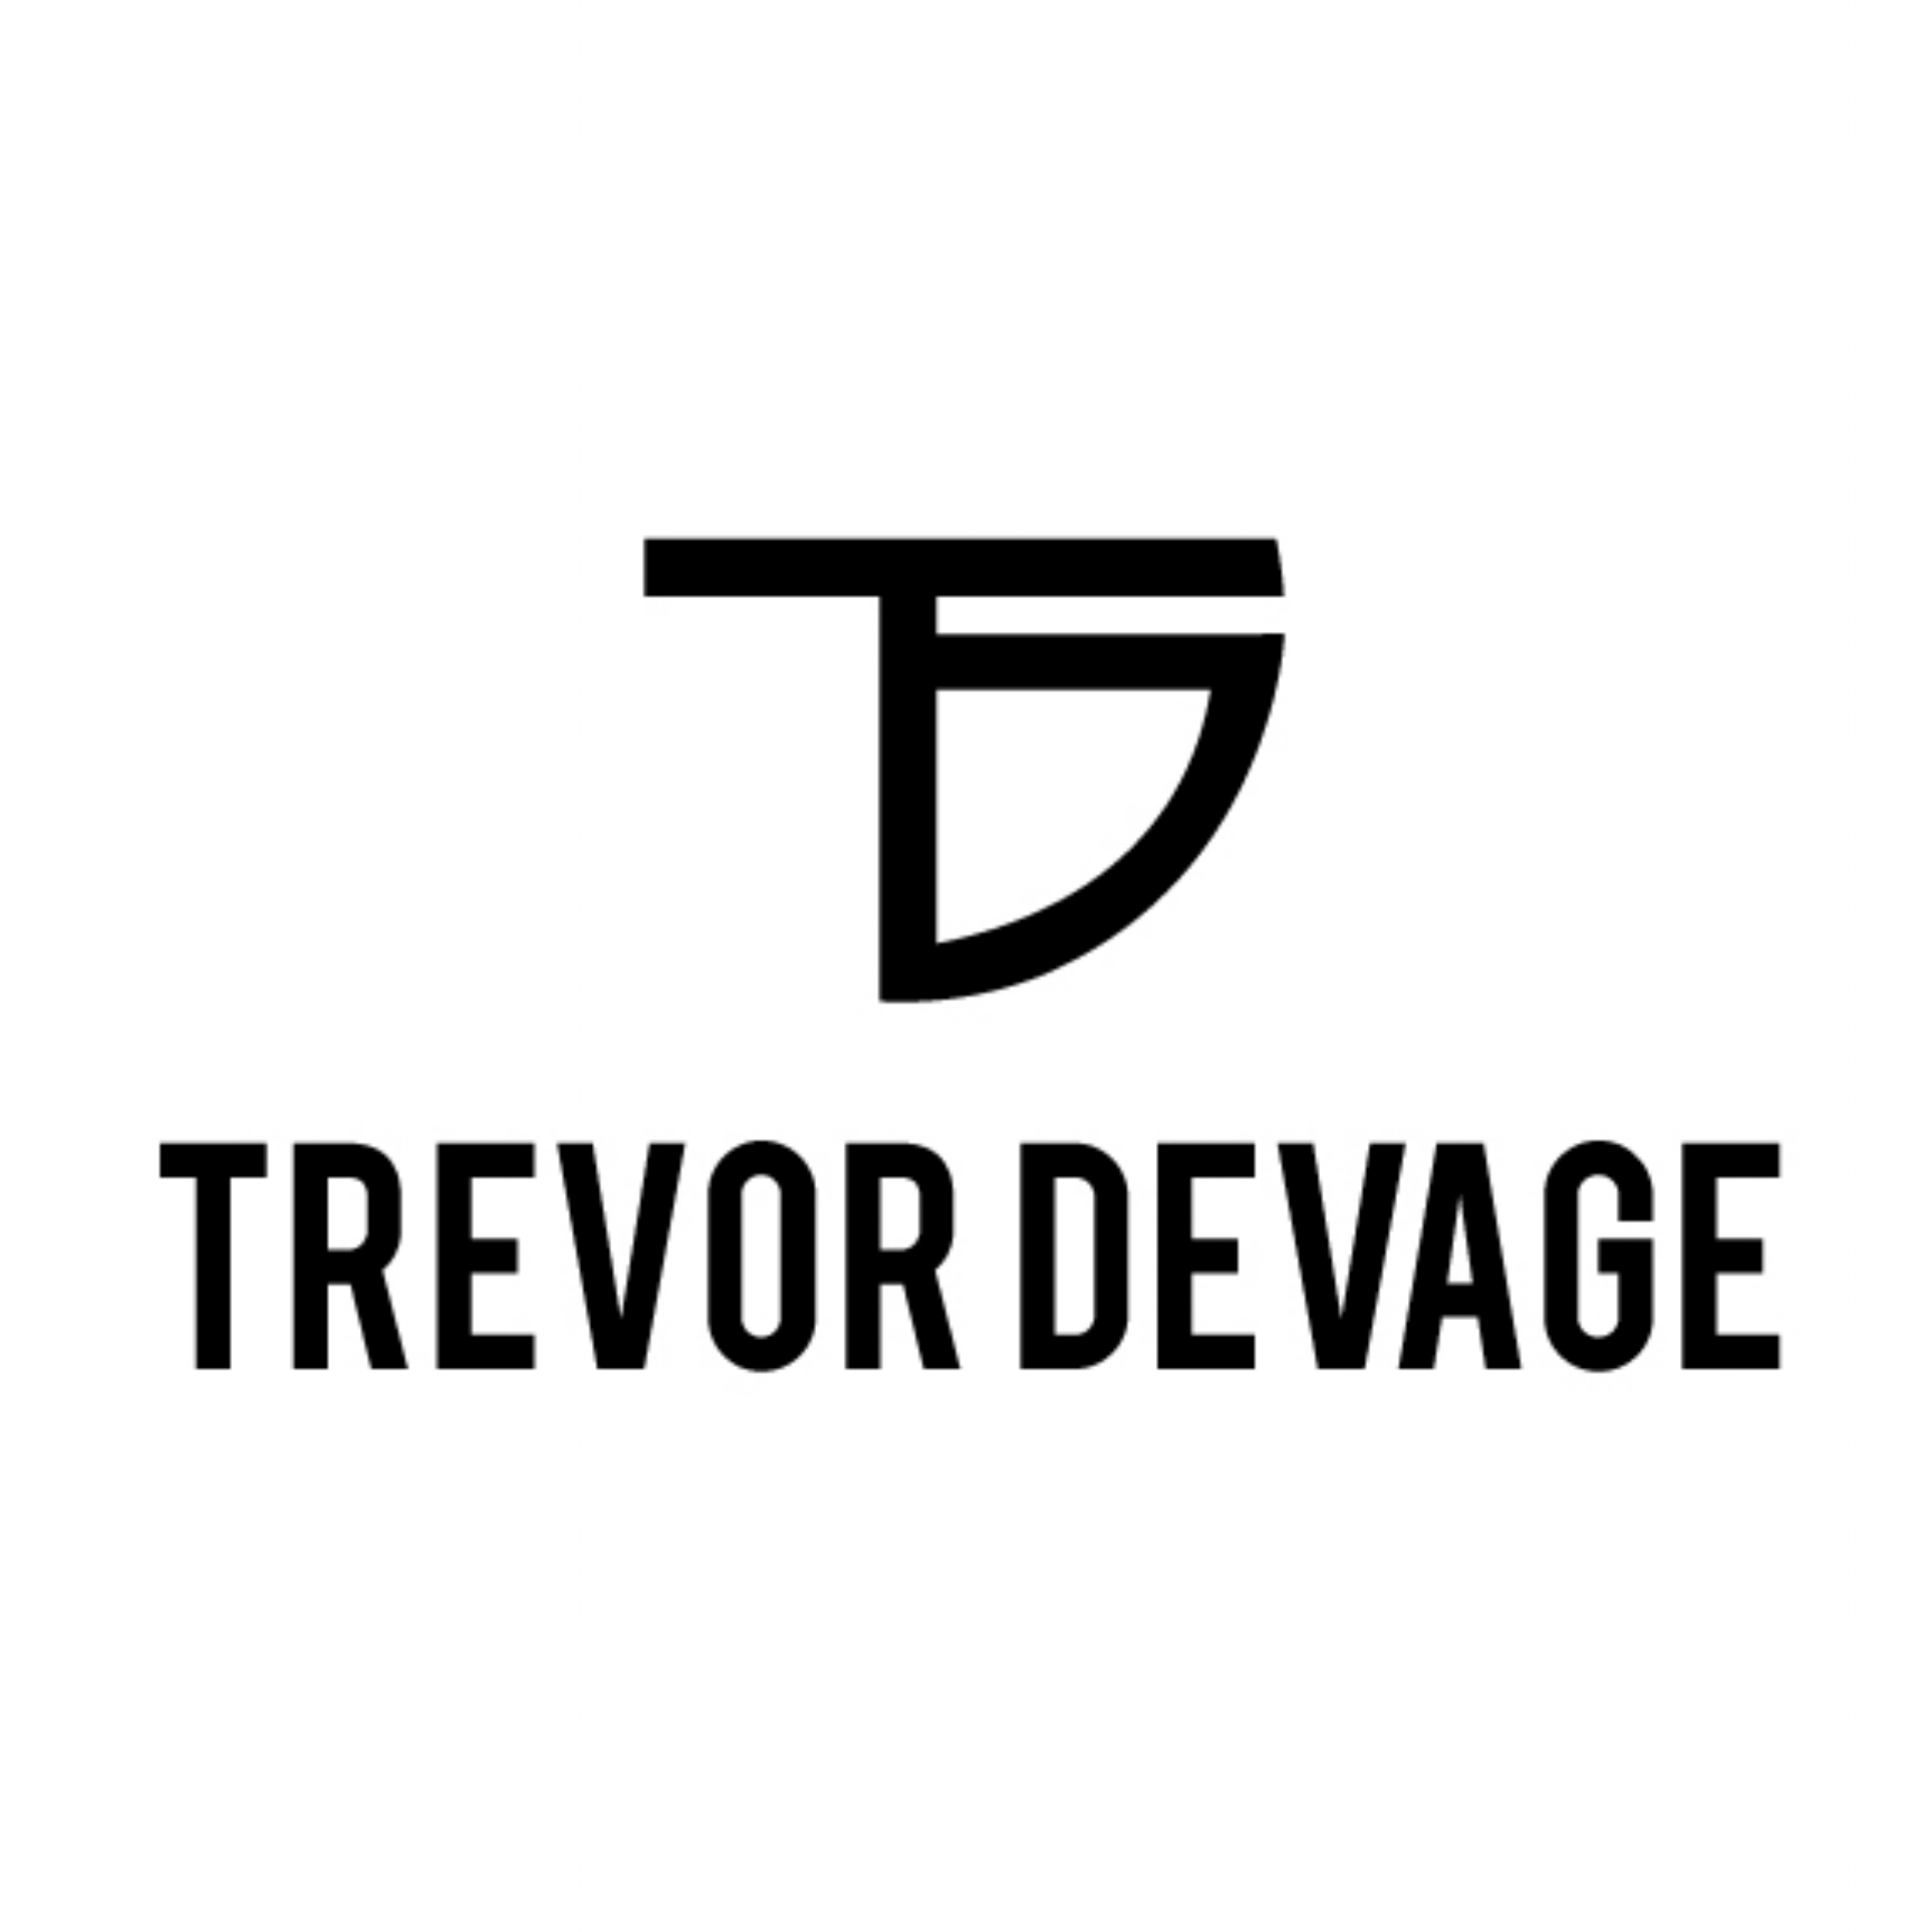 Trevor DeVage